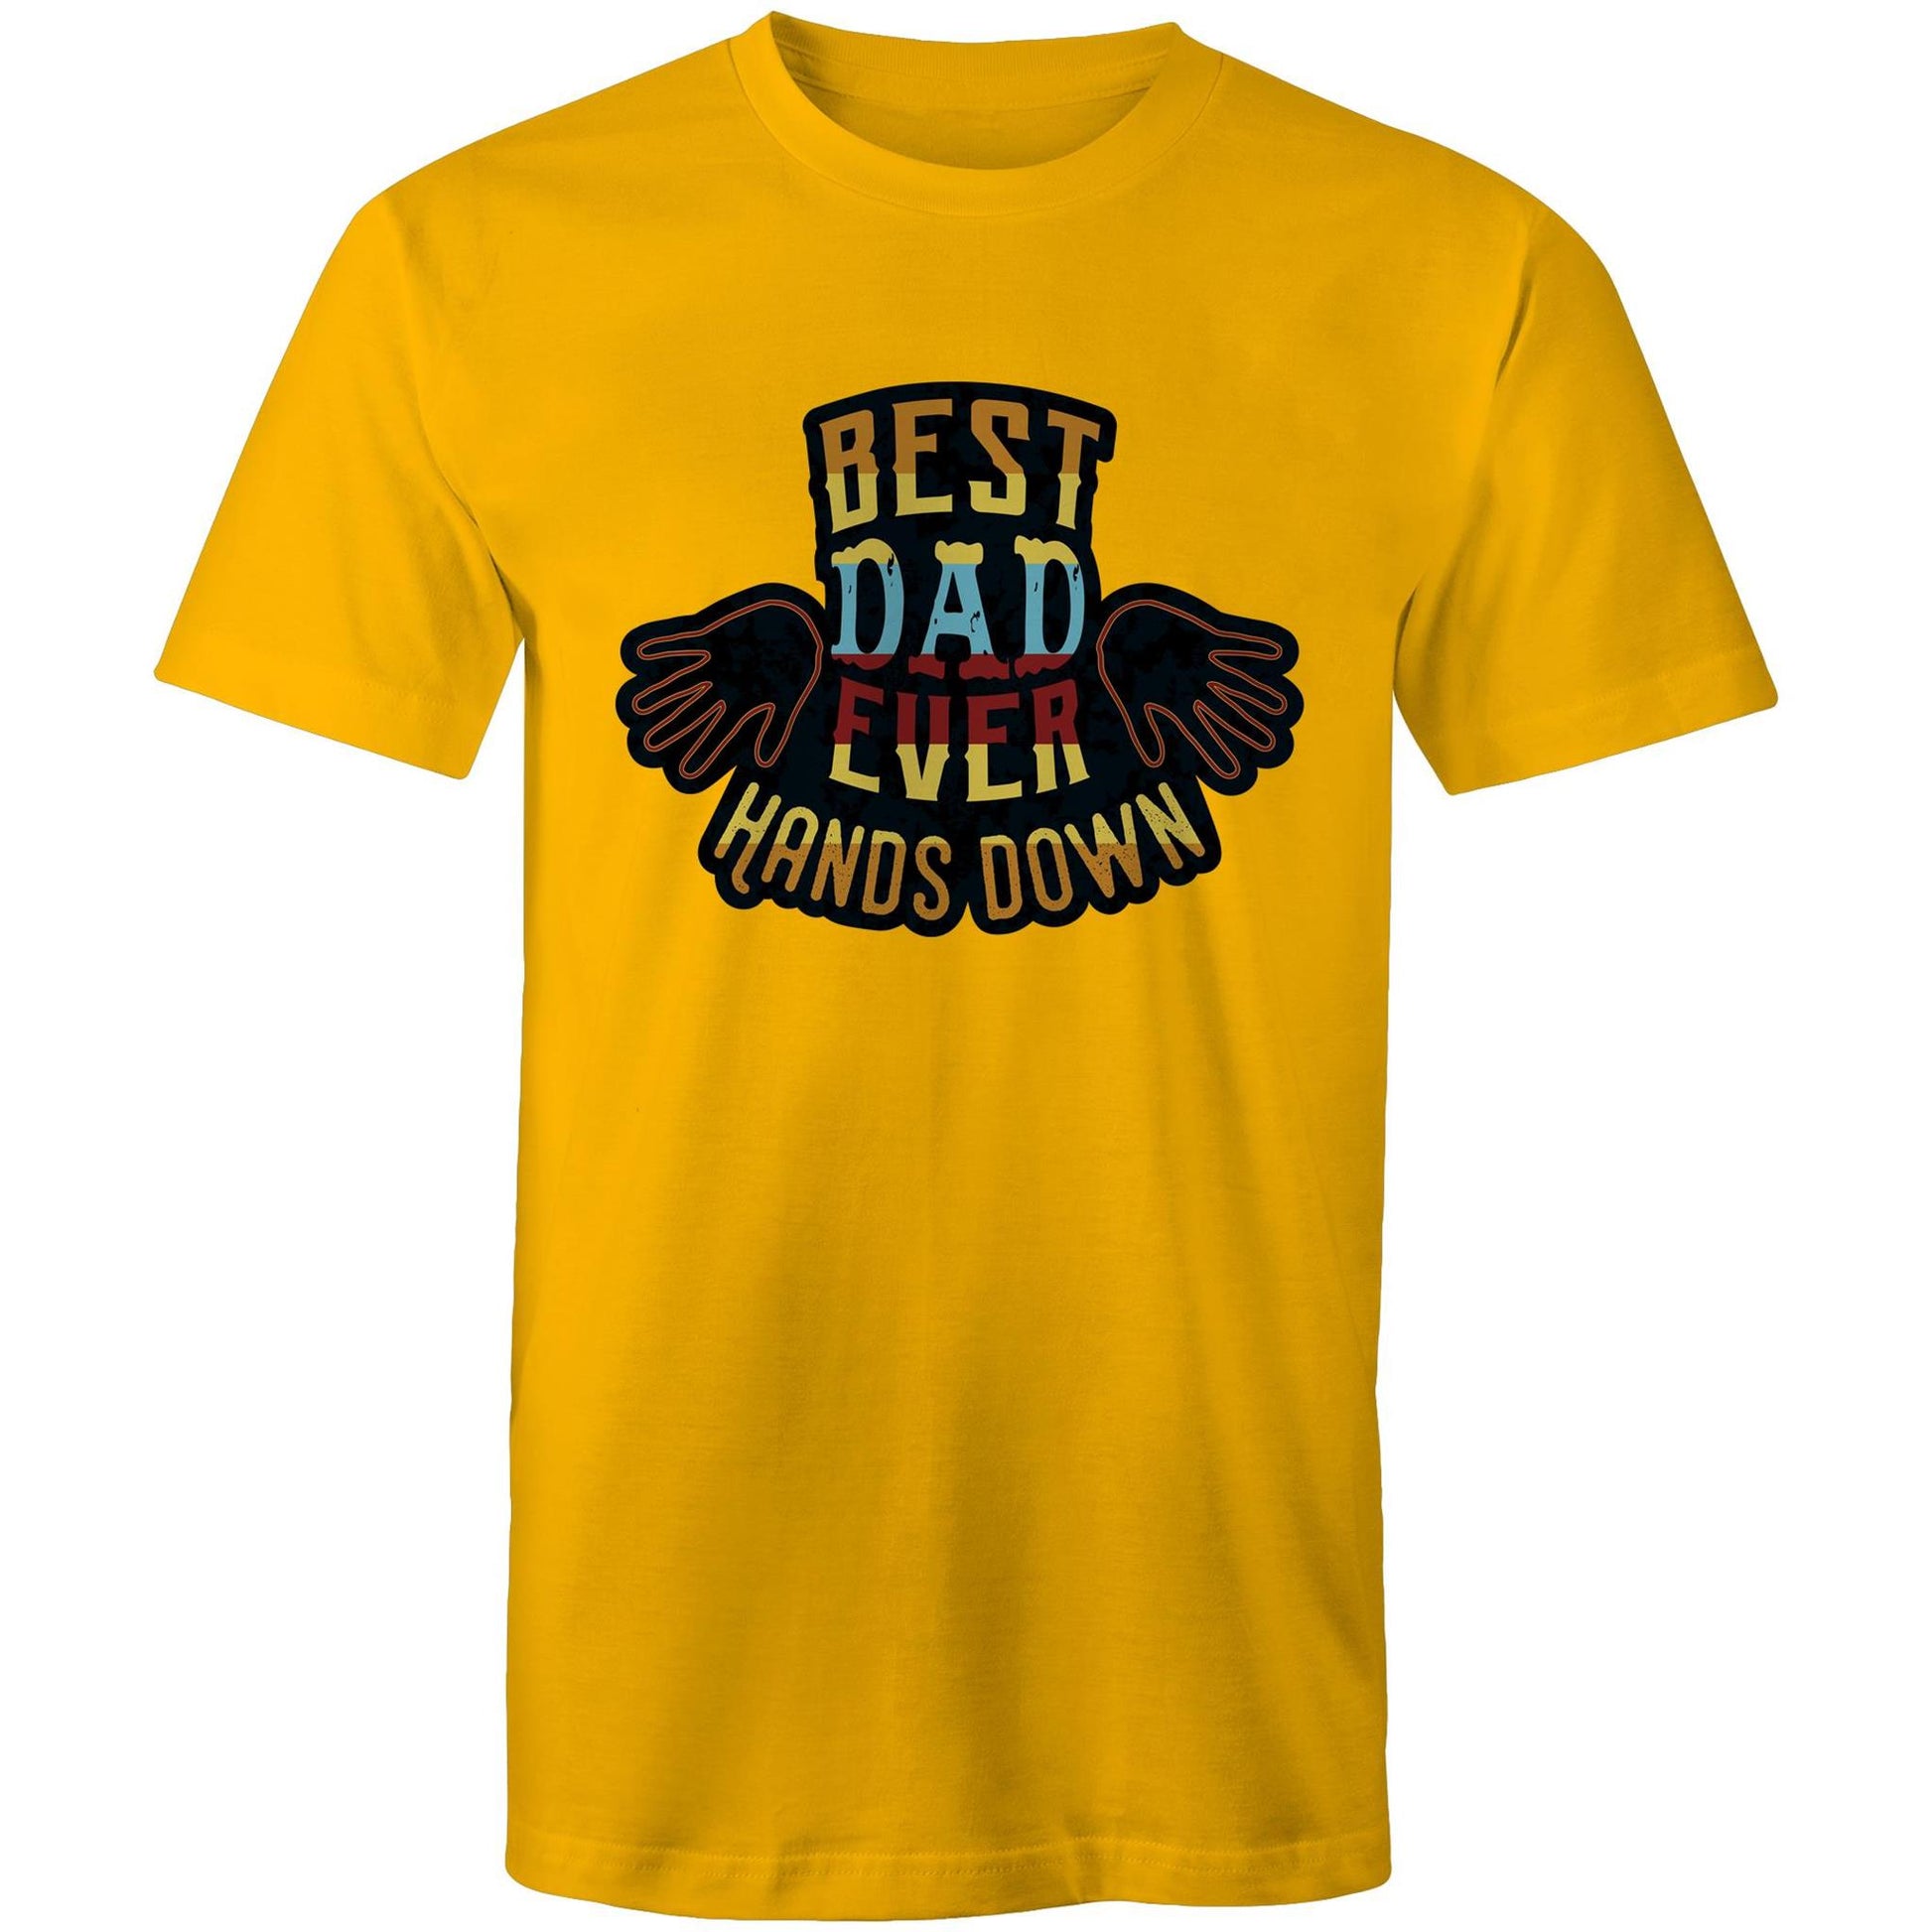 Best Dad Ever, Hands Down - Mens T-Shirt Gold Mens T-shirt Dad